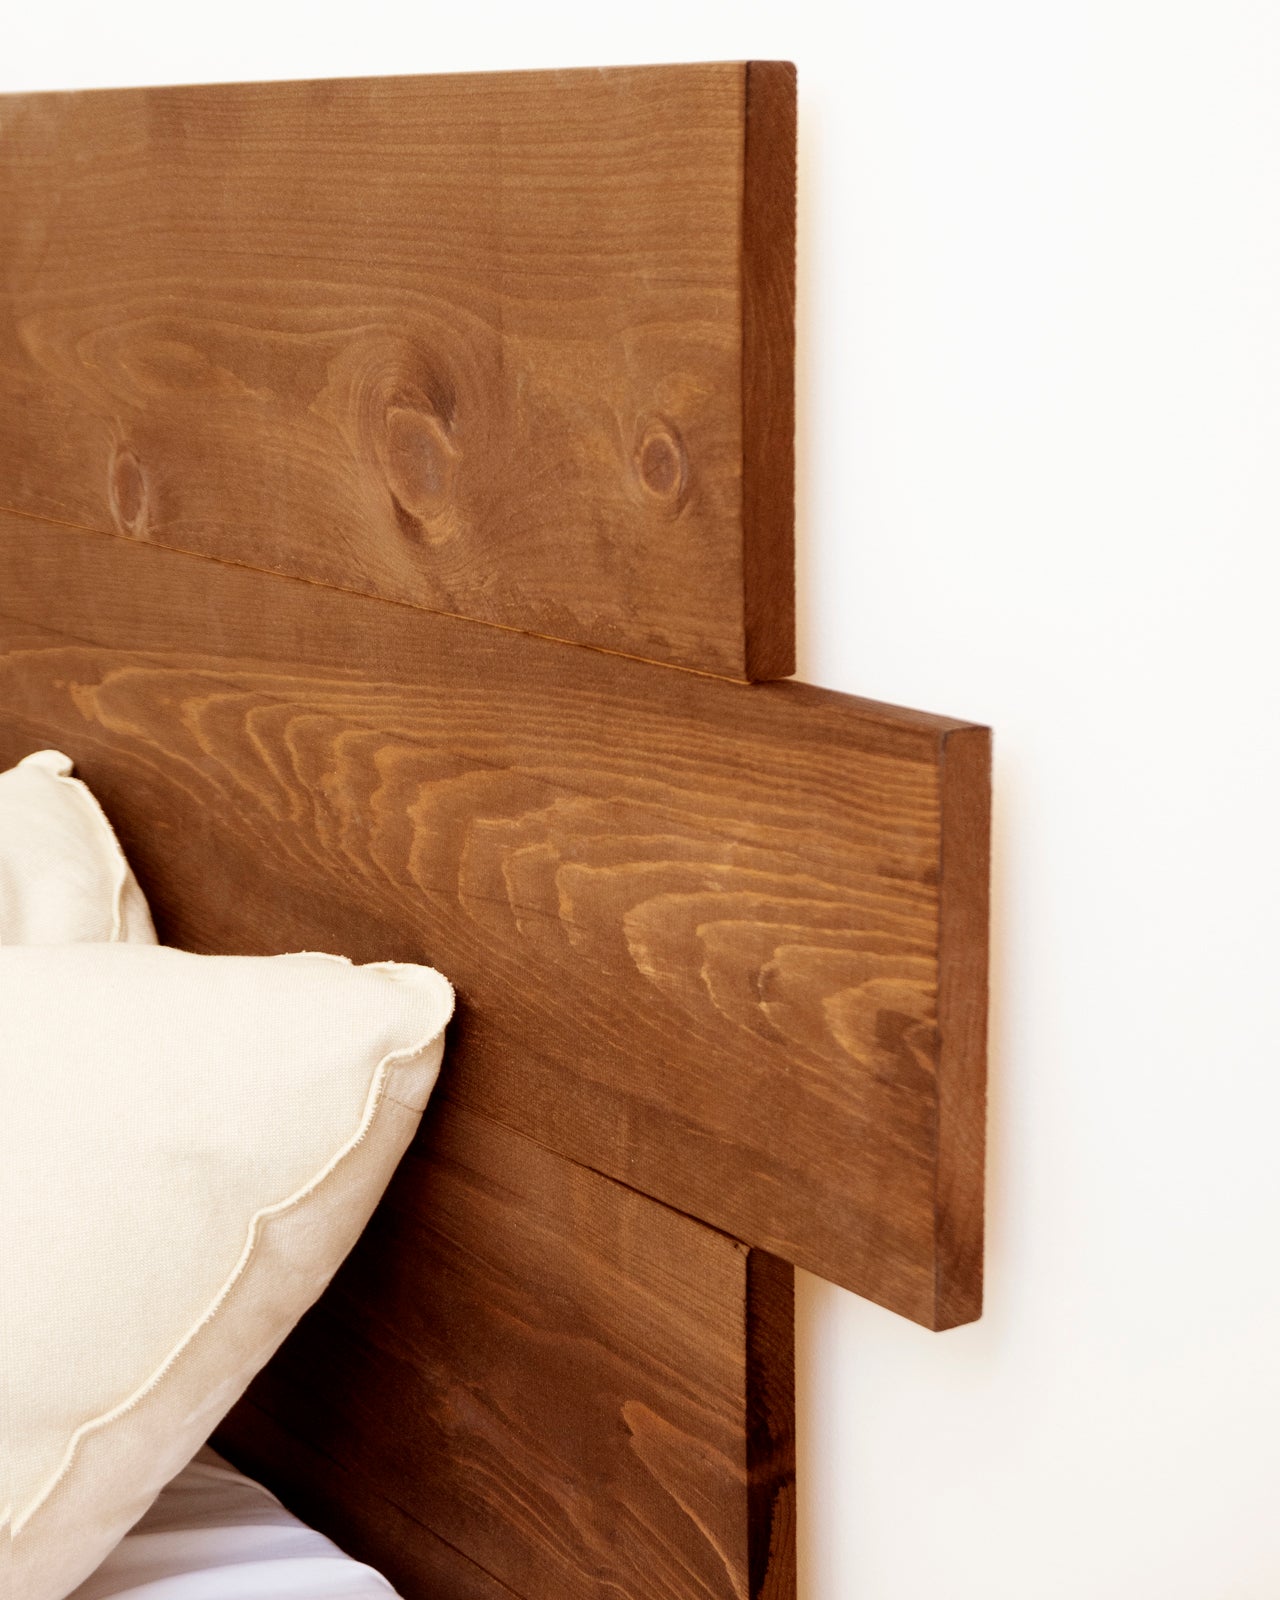 Cabecero de madera maciza asimétrico tono nogal 120x60cm - DECOWOOD